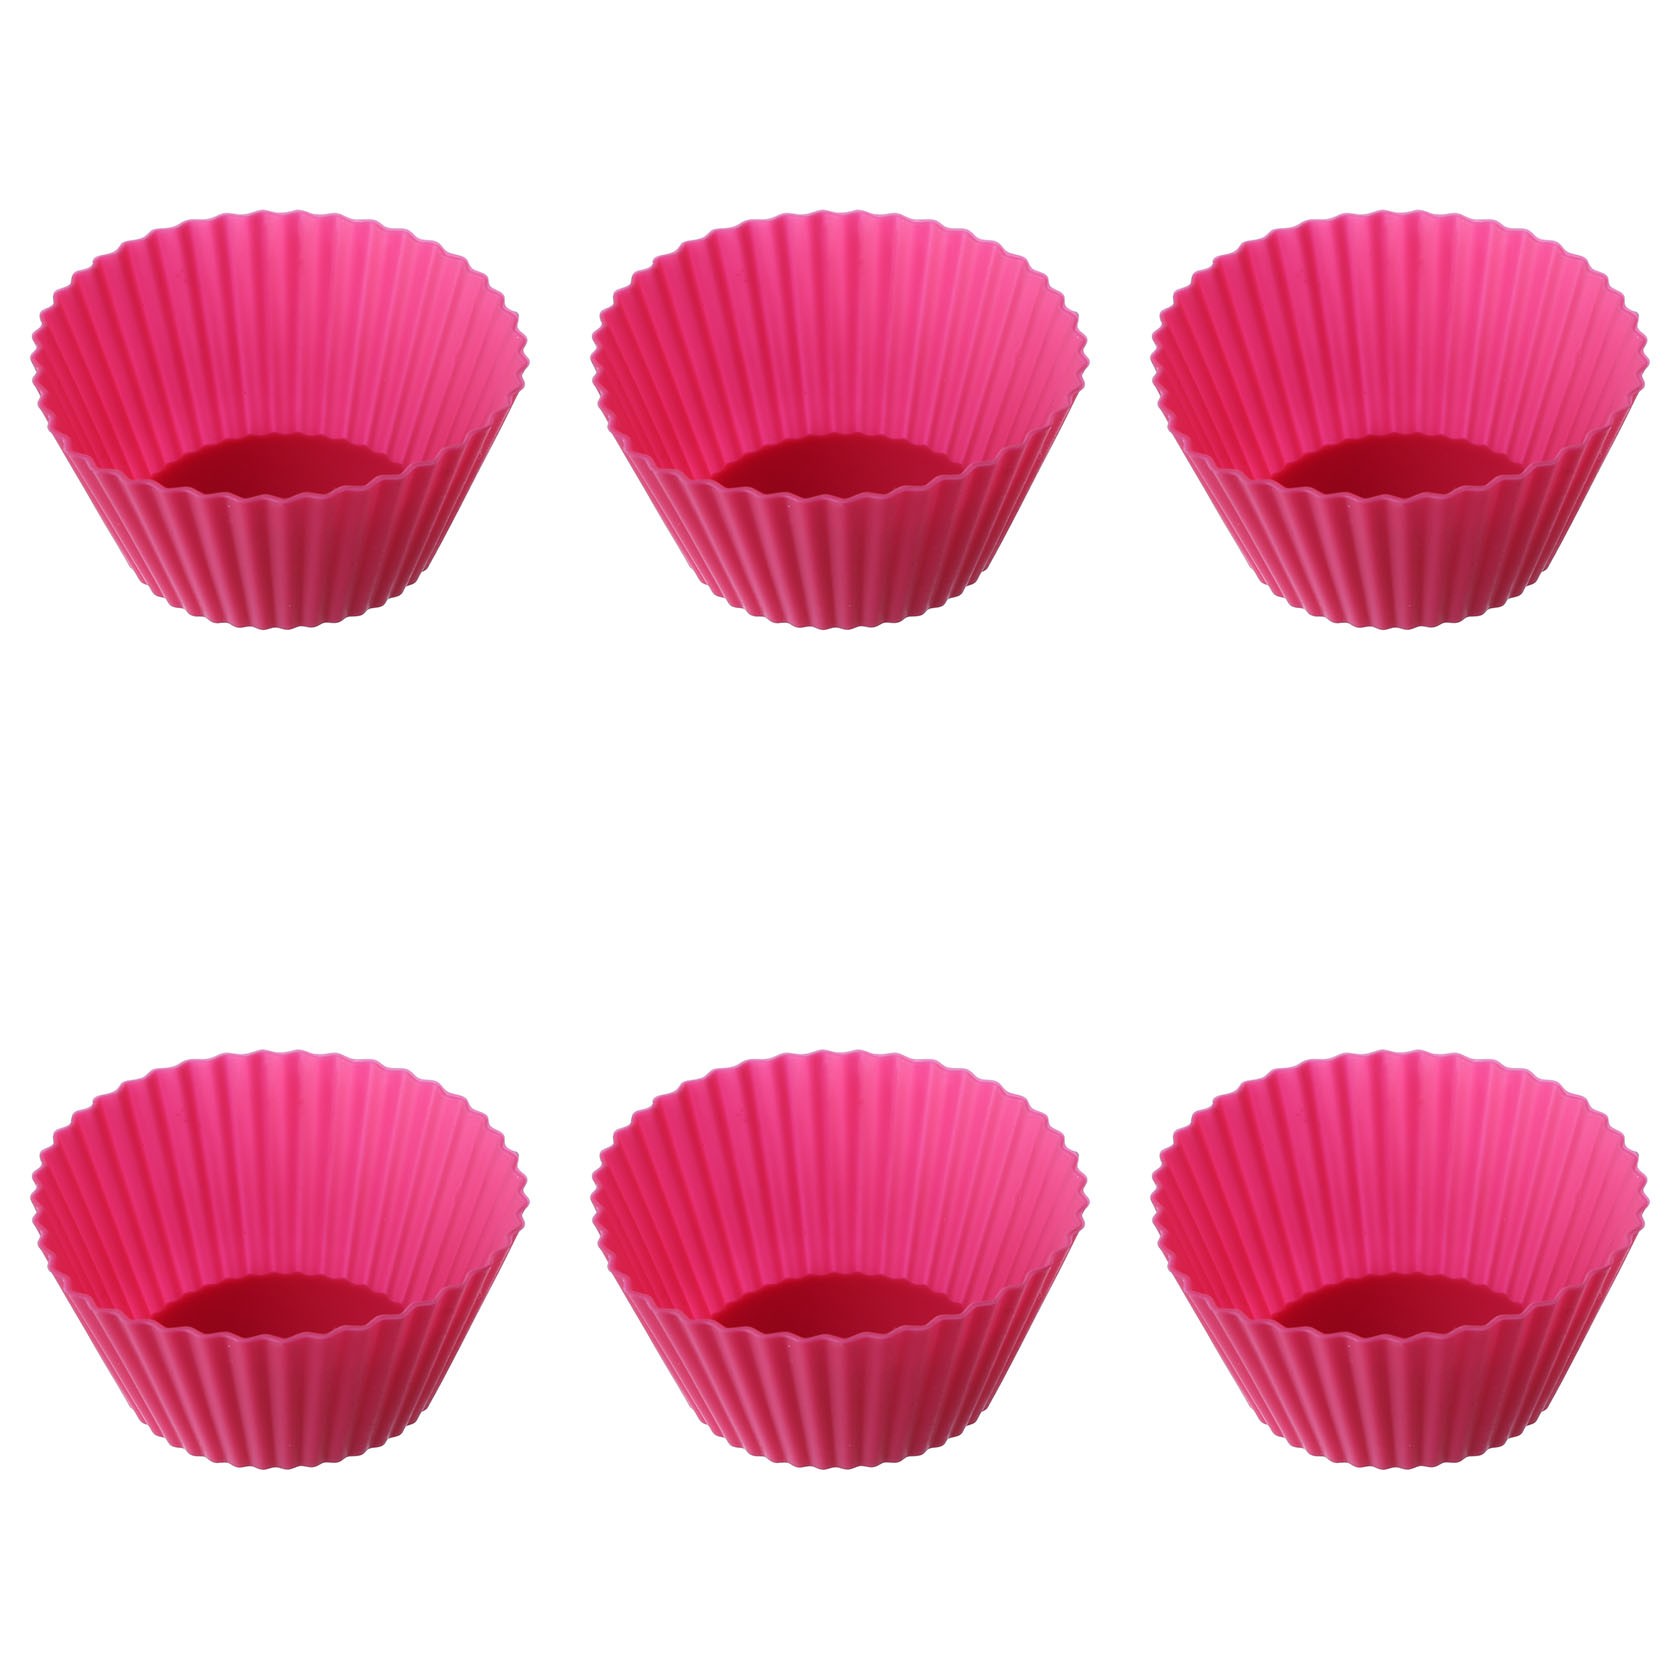 Kan weerstaan Gestaag staking Cakevormpjes siliconen roze/taupe 6st - FirstXL